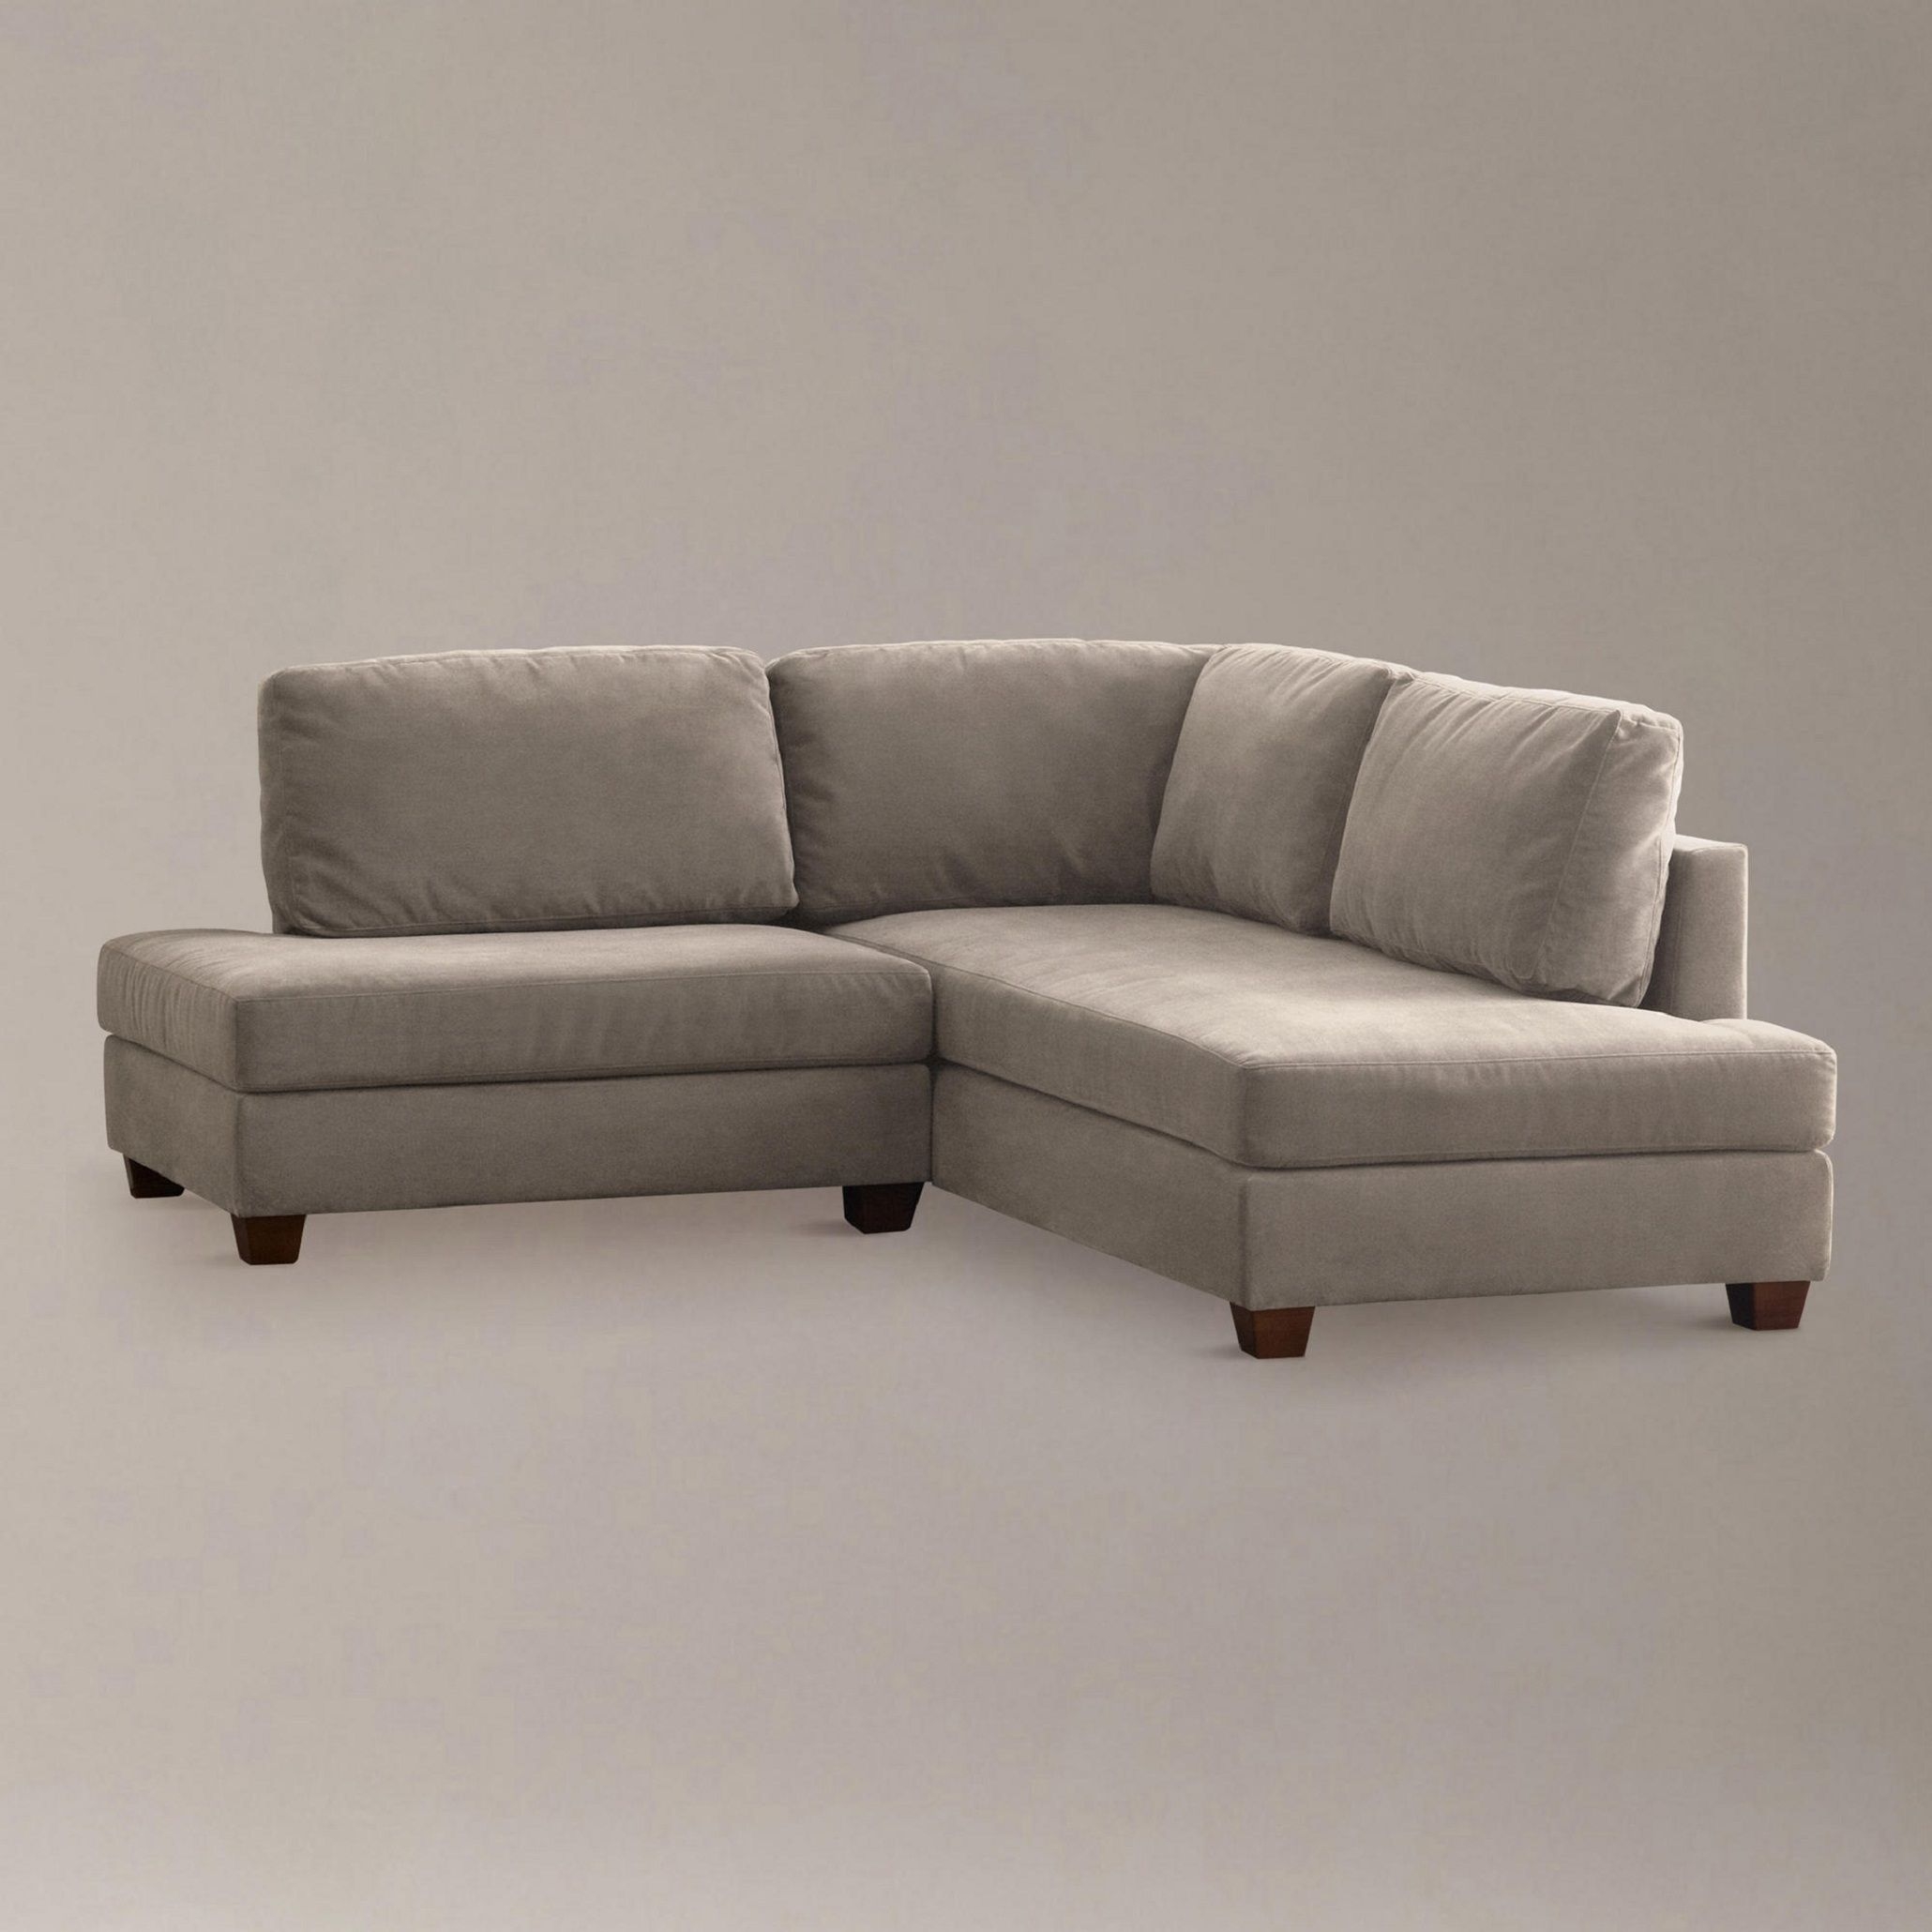 Small sectional sofa 4